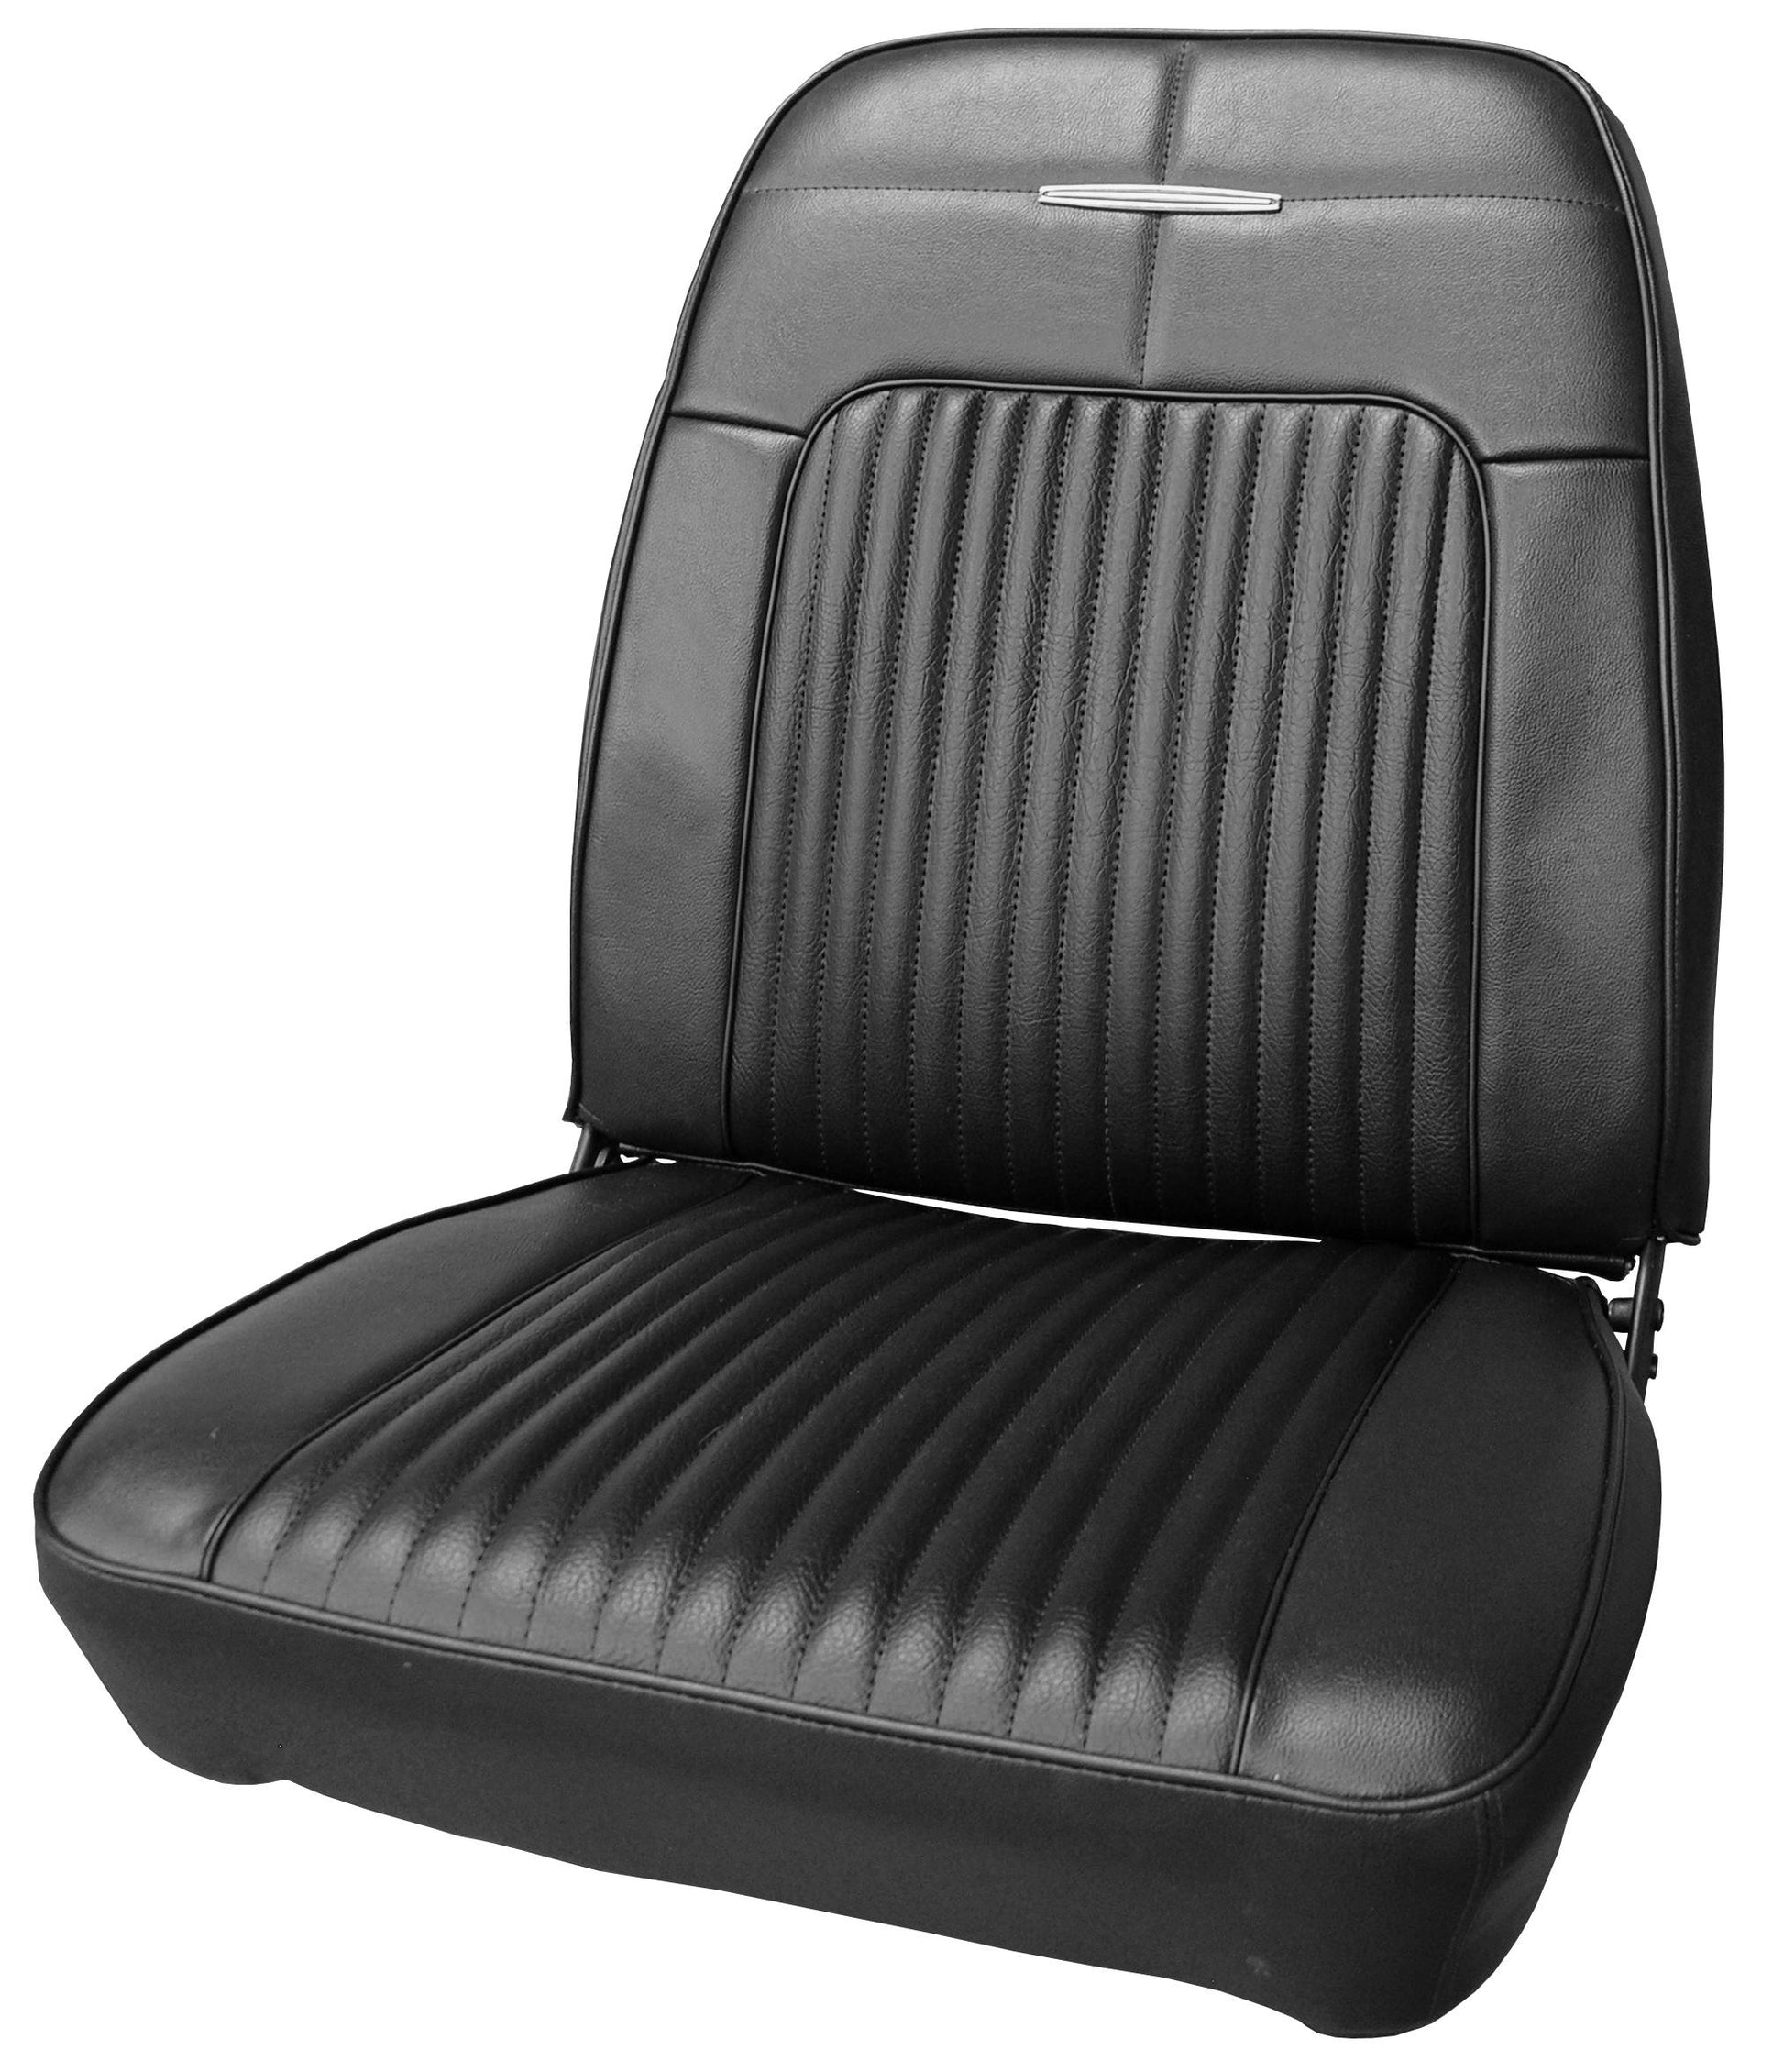 Auto Upholstery Needs Inc. - Louis Vuitton bucket seats. Fancy Fancy !! # louisvuitton @ Auto Upholstery Needs autoupholsterydfw.com